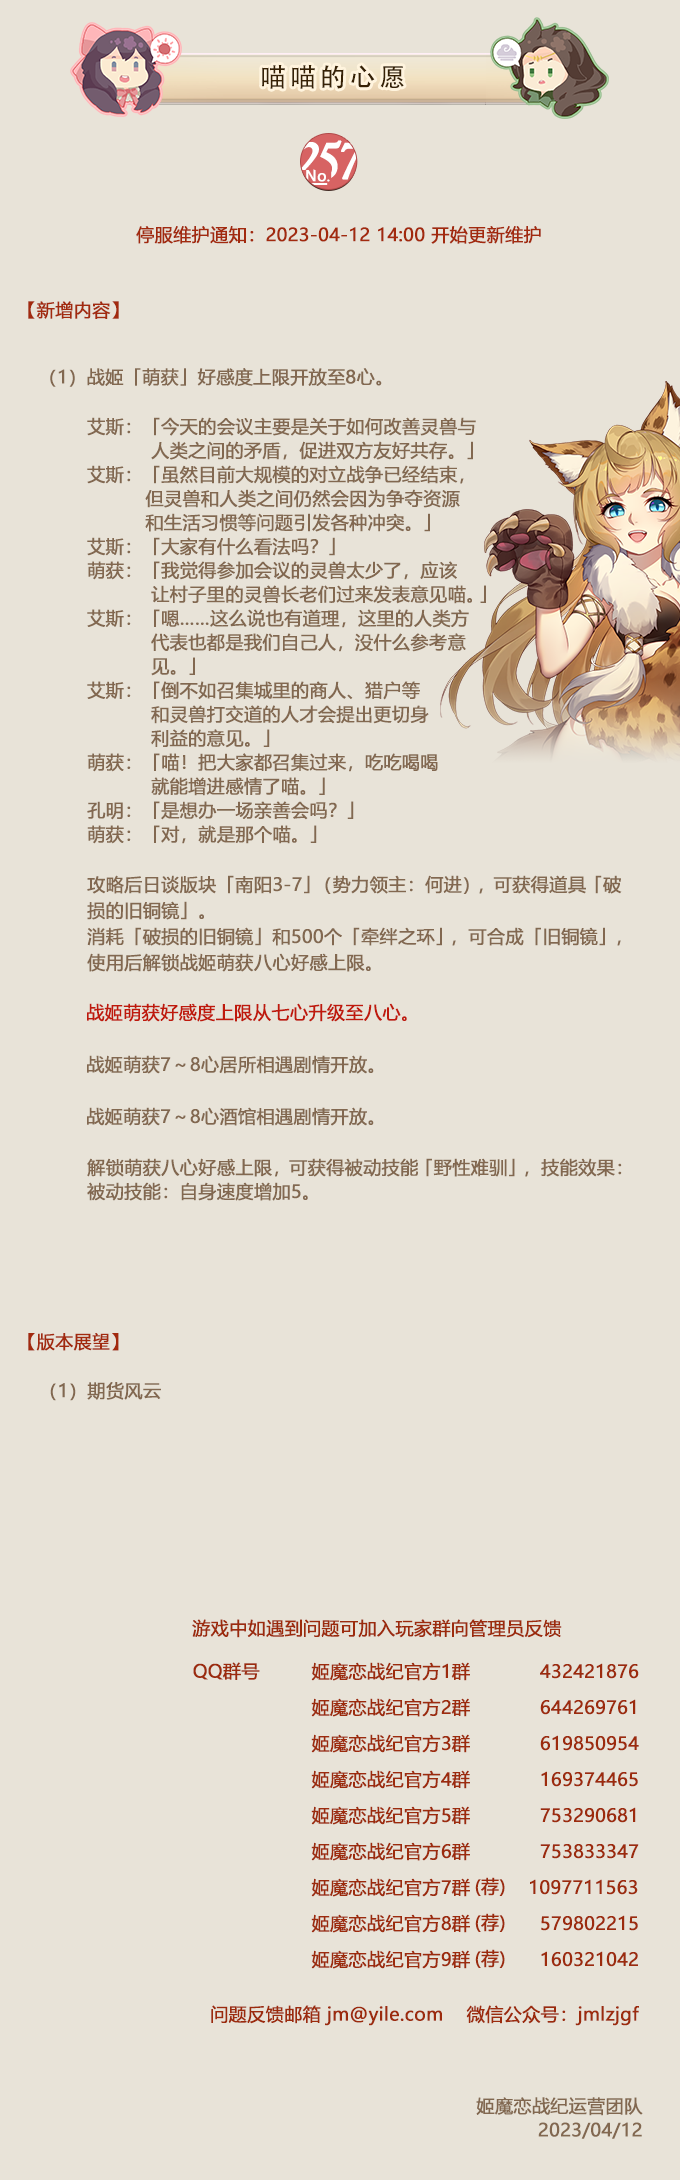 No.257 喵喵的心愿《姬魔恋战纪》4月12日更新公告